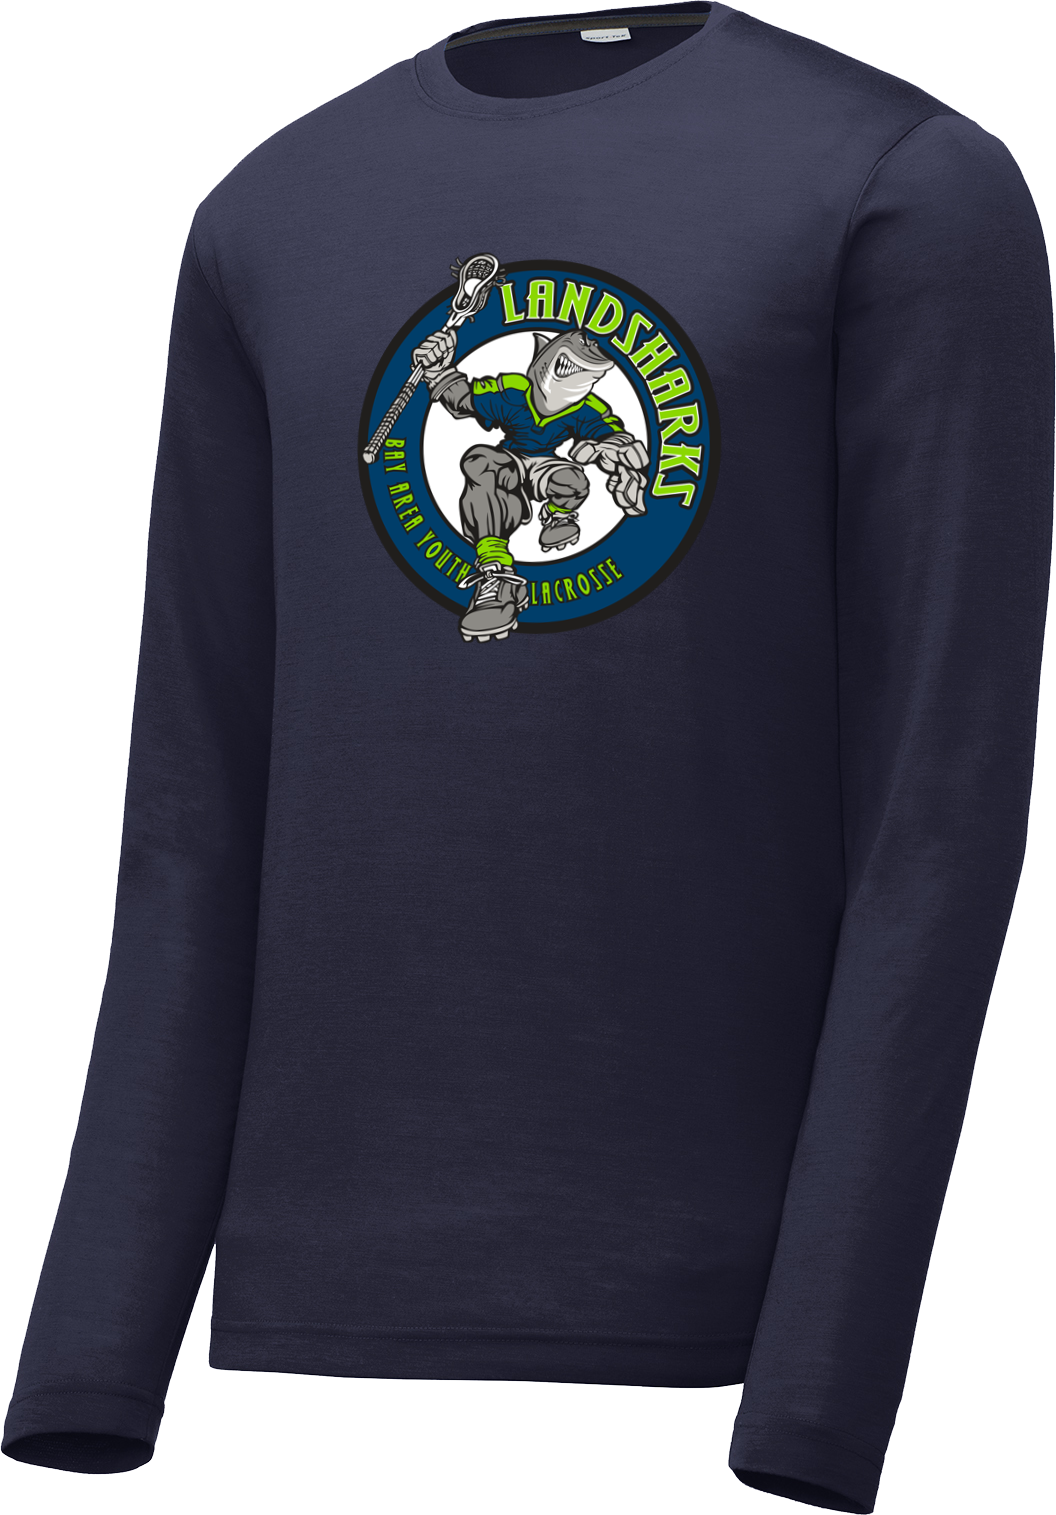 Bay Area Landsharks Navy Long Sleeve CottonTouch Performance Shirt